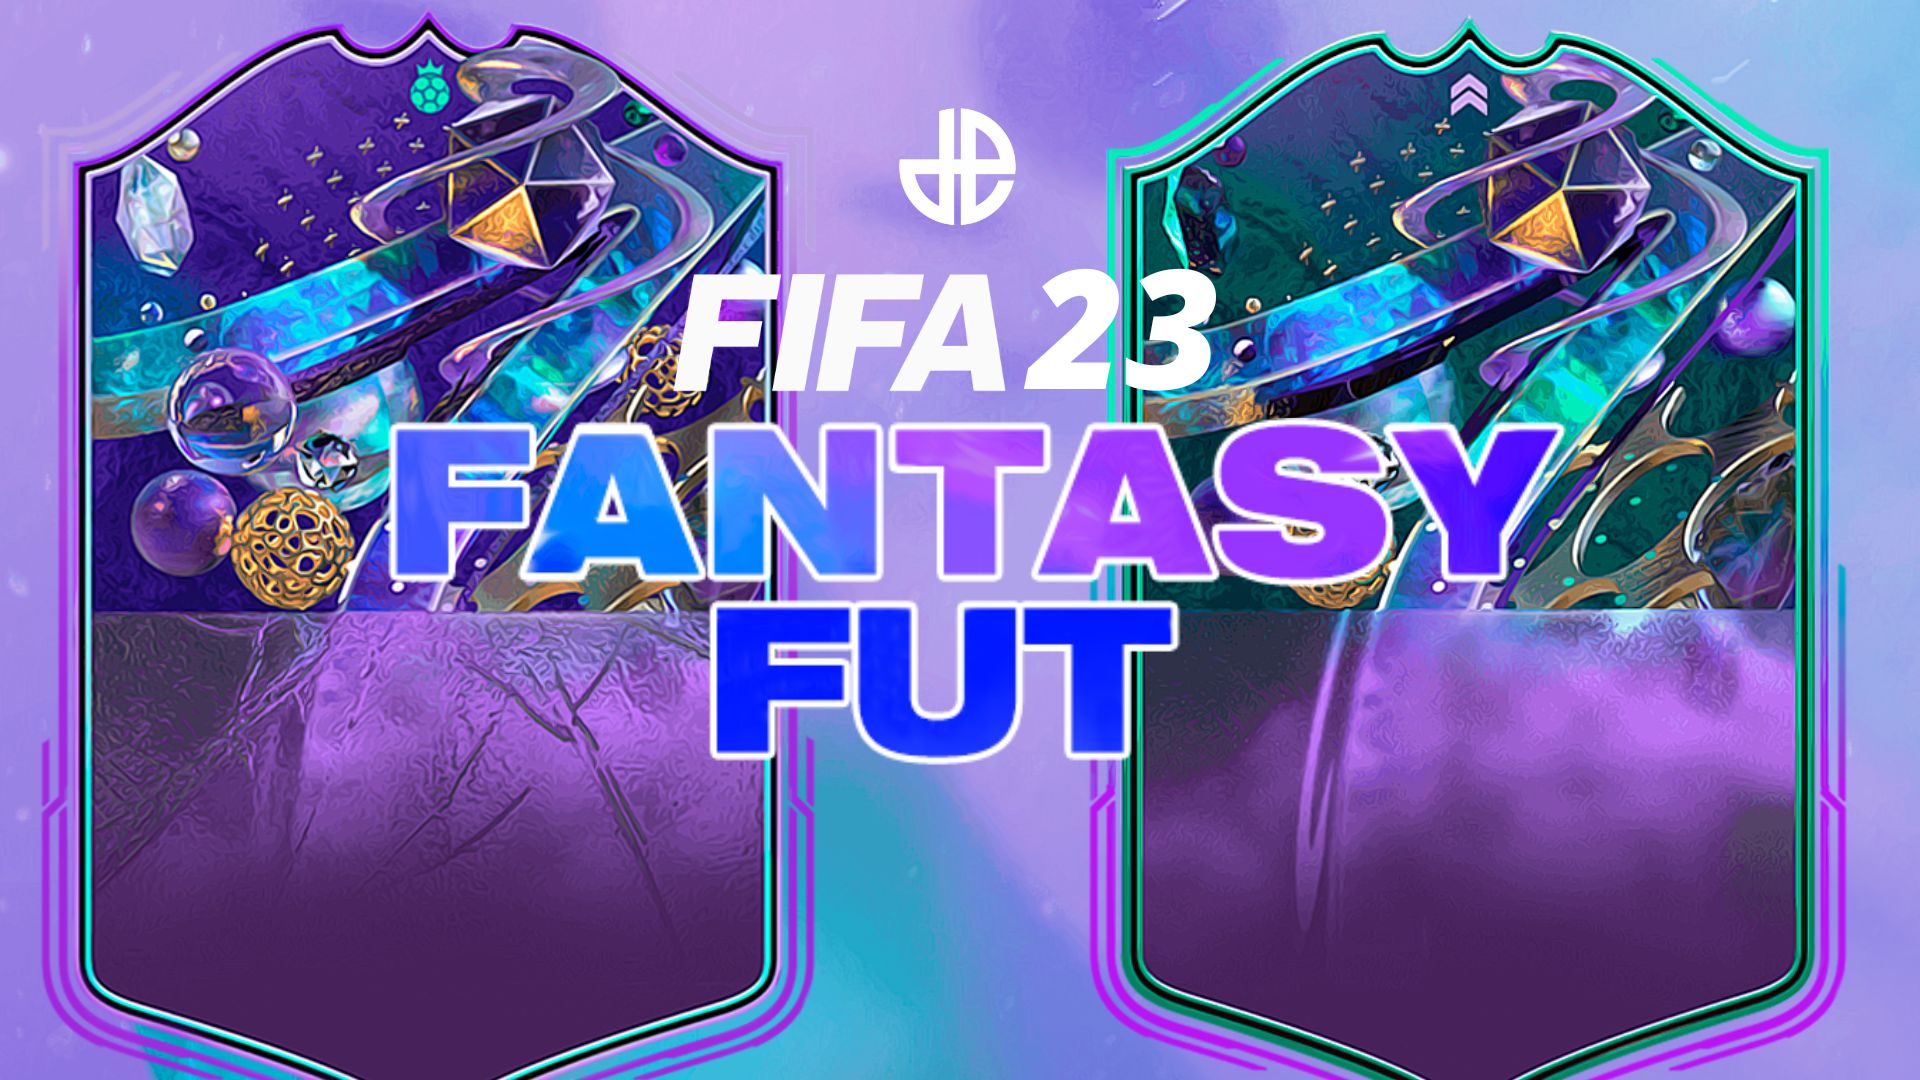 FIFA 23 Fantasy FUT: Team 1 revealed, leaked players, more